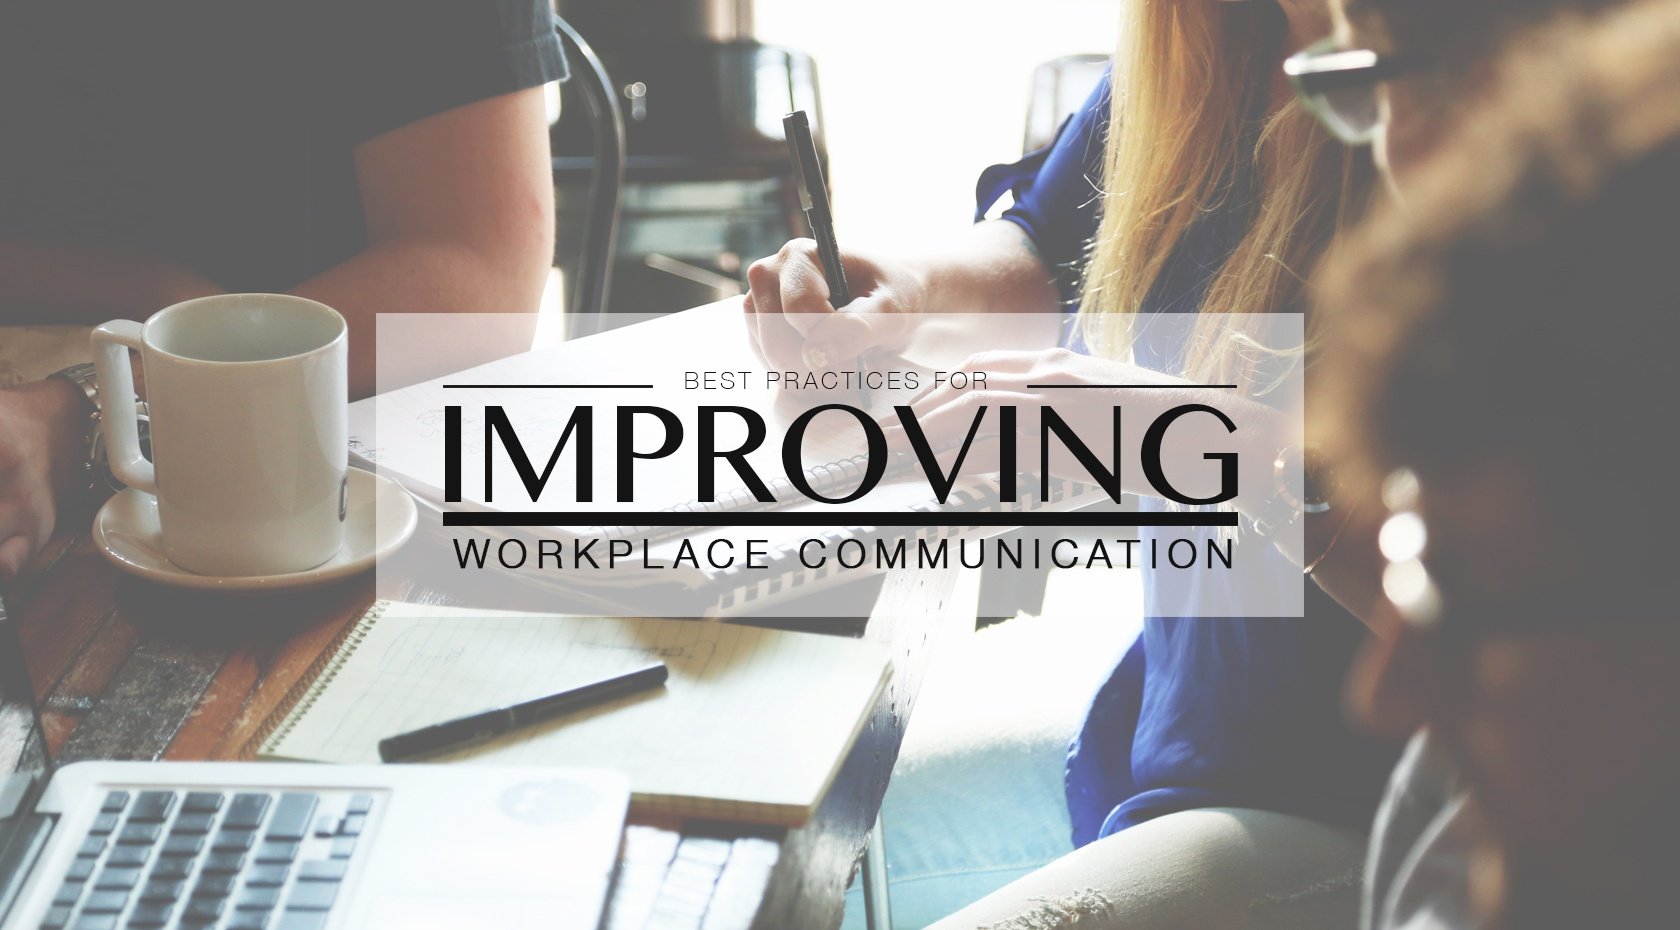 Improving workplace communication